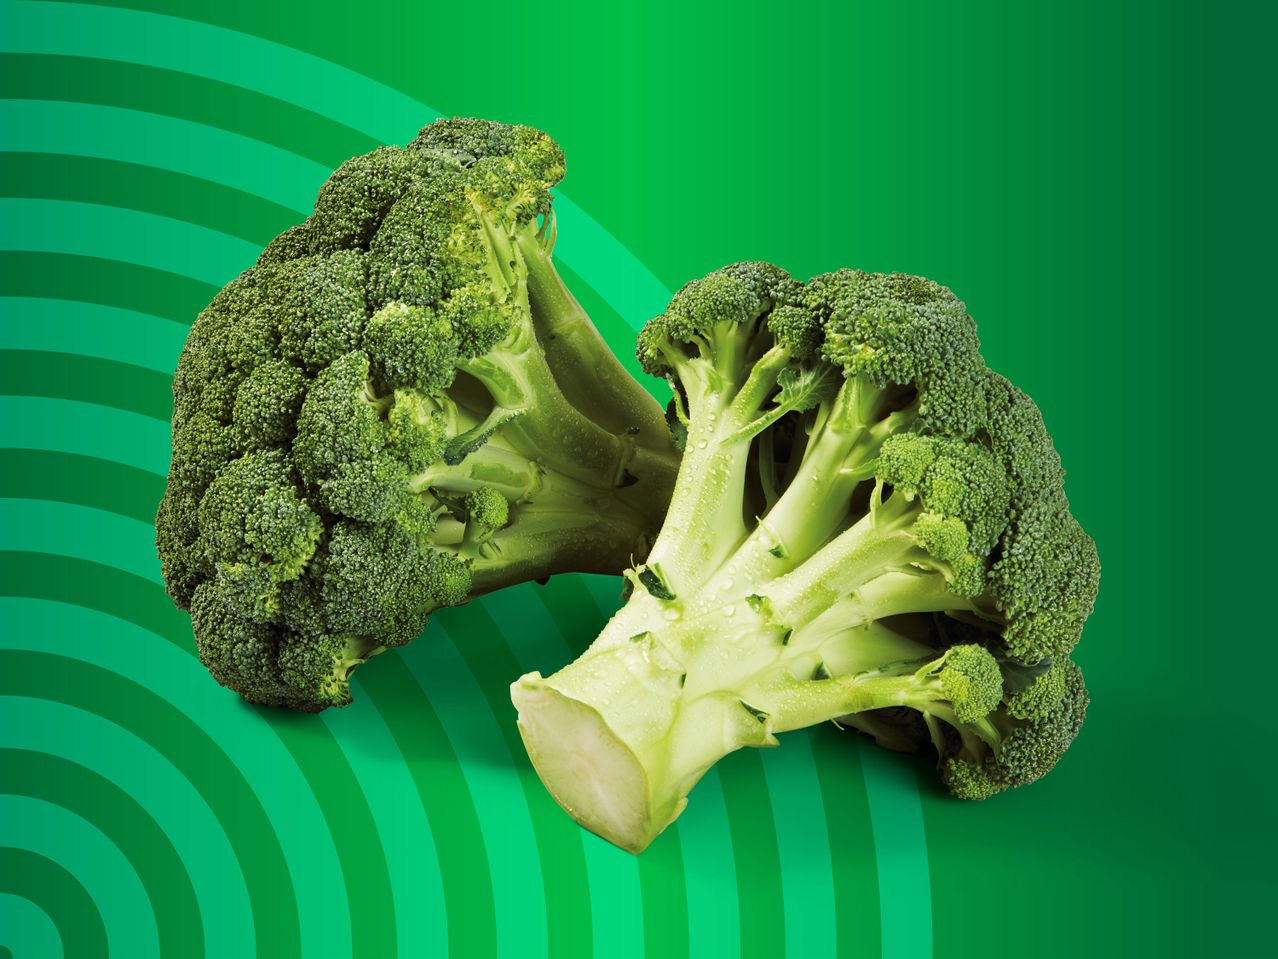 Broccoli Bio